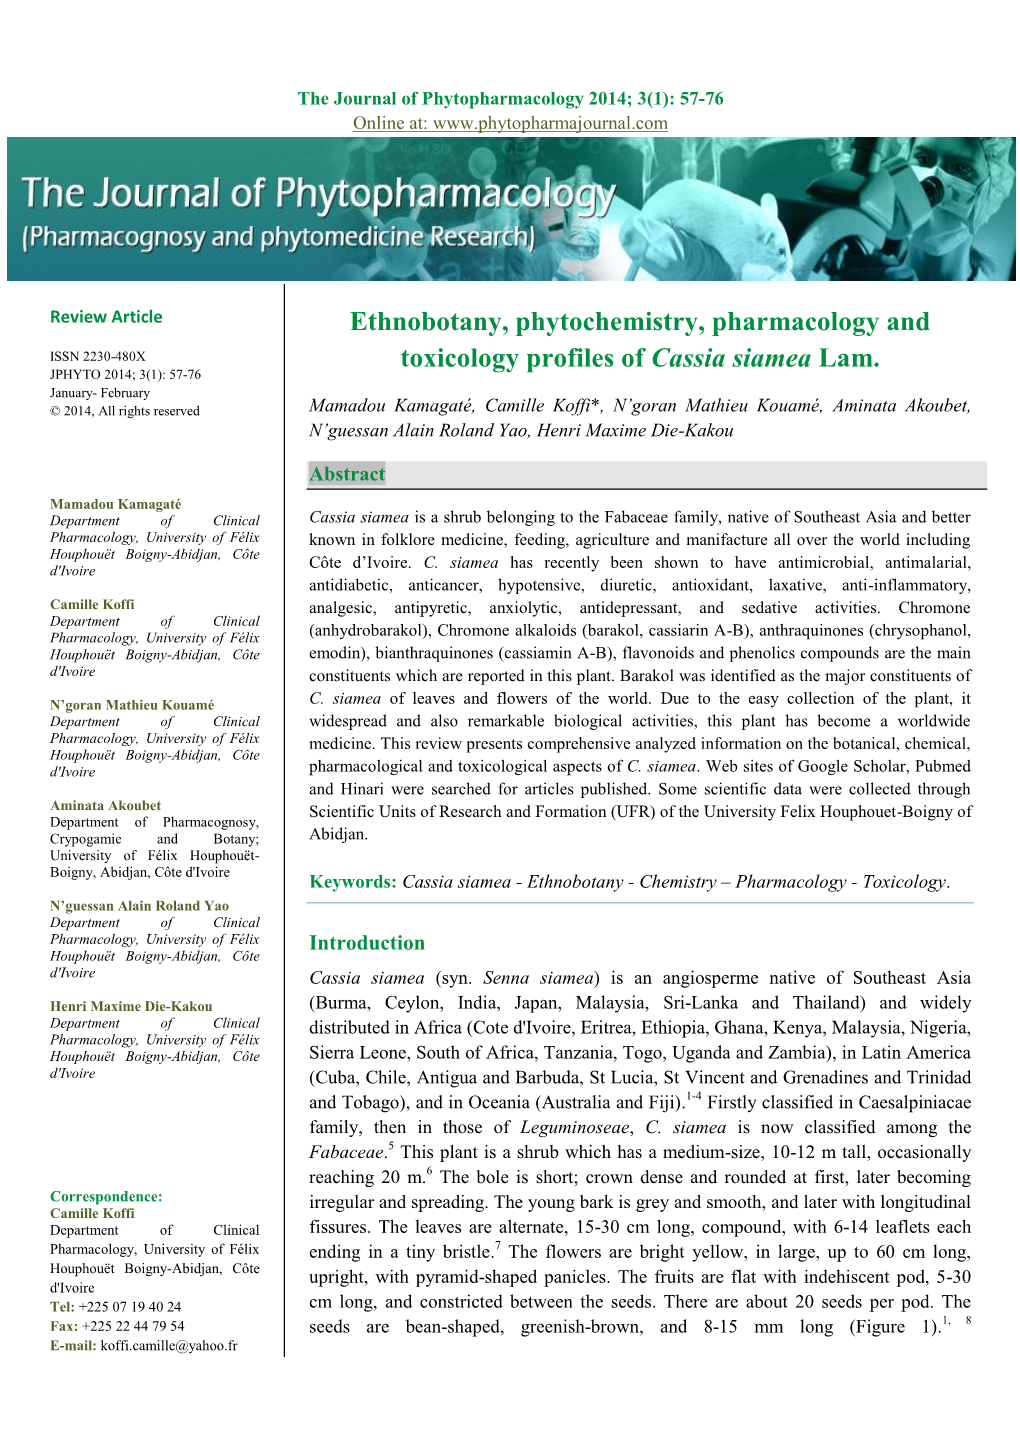 Ethnobotany, Phytochemistry, Pharmacology and Toxicology